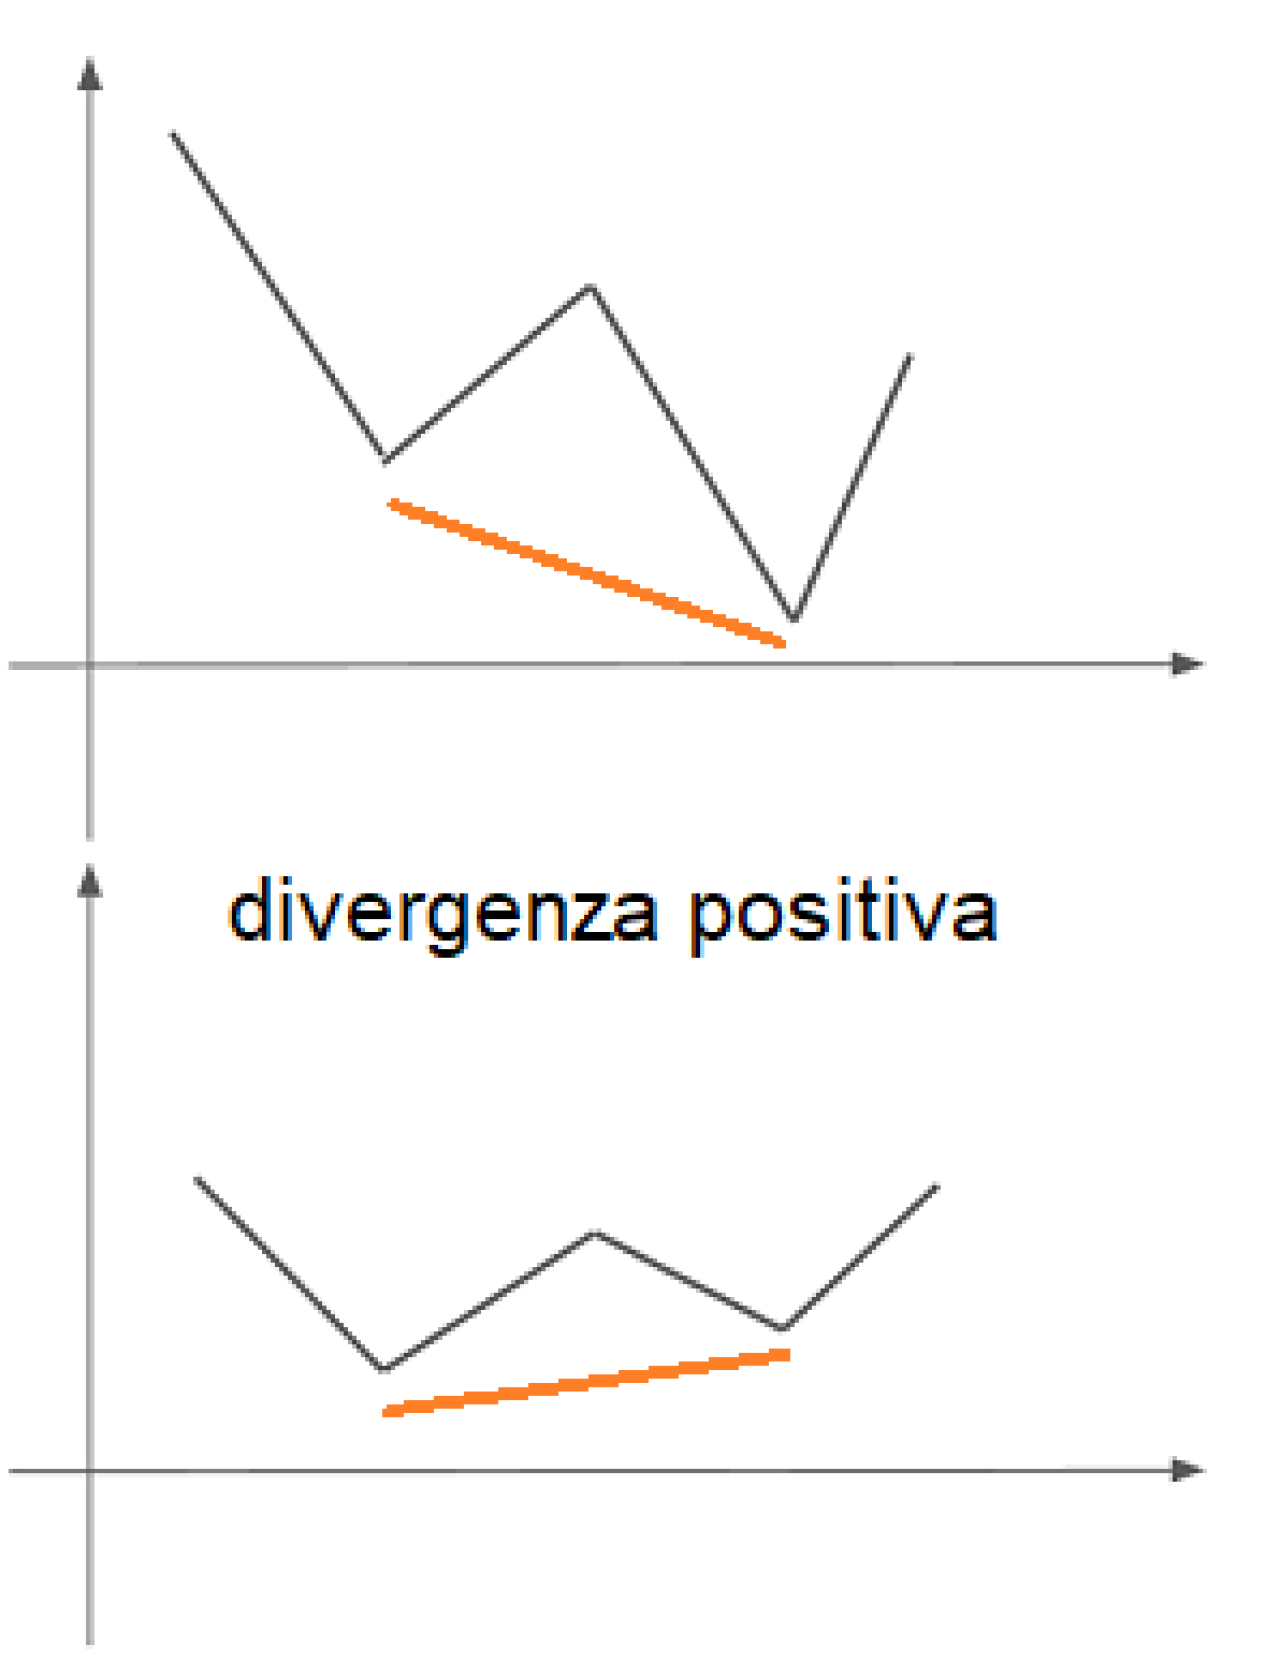 divergenza convergenza positiva rialzista bullish trading.